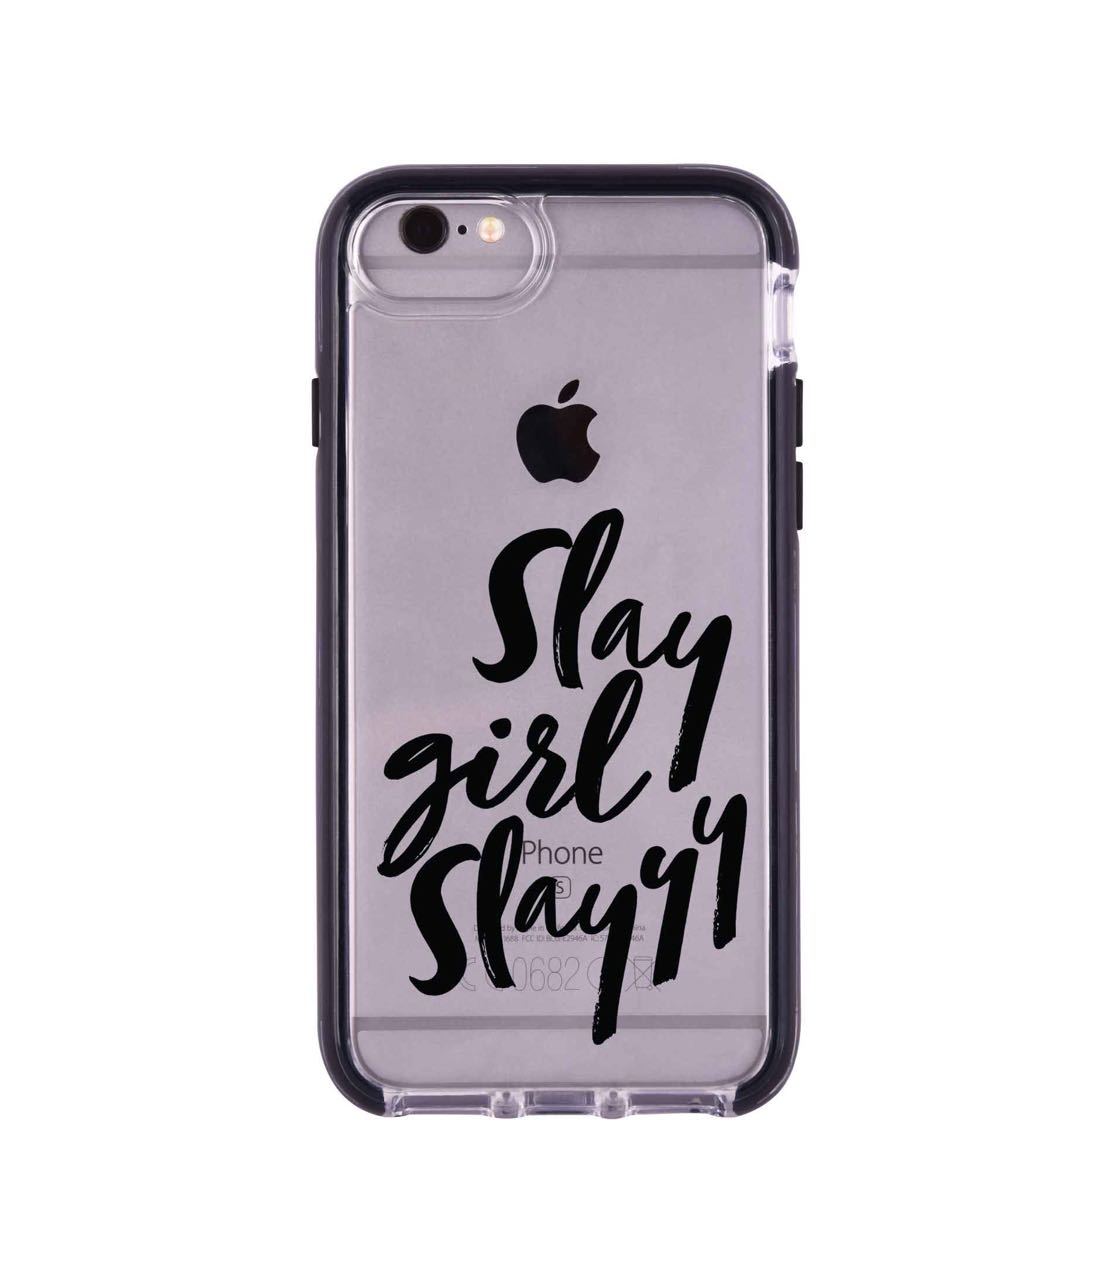 Slay girl Slay - Extreme Phone Case for iPhone 6S